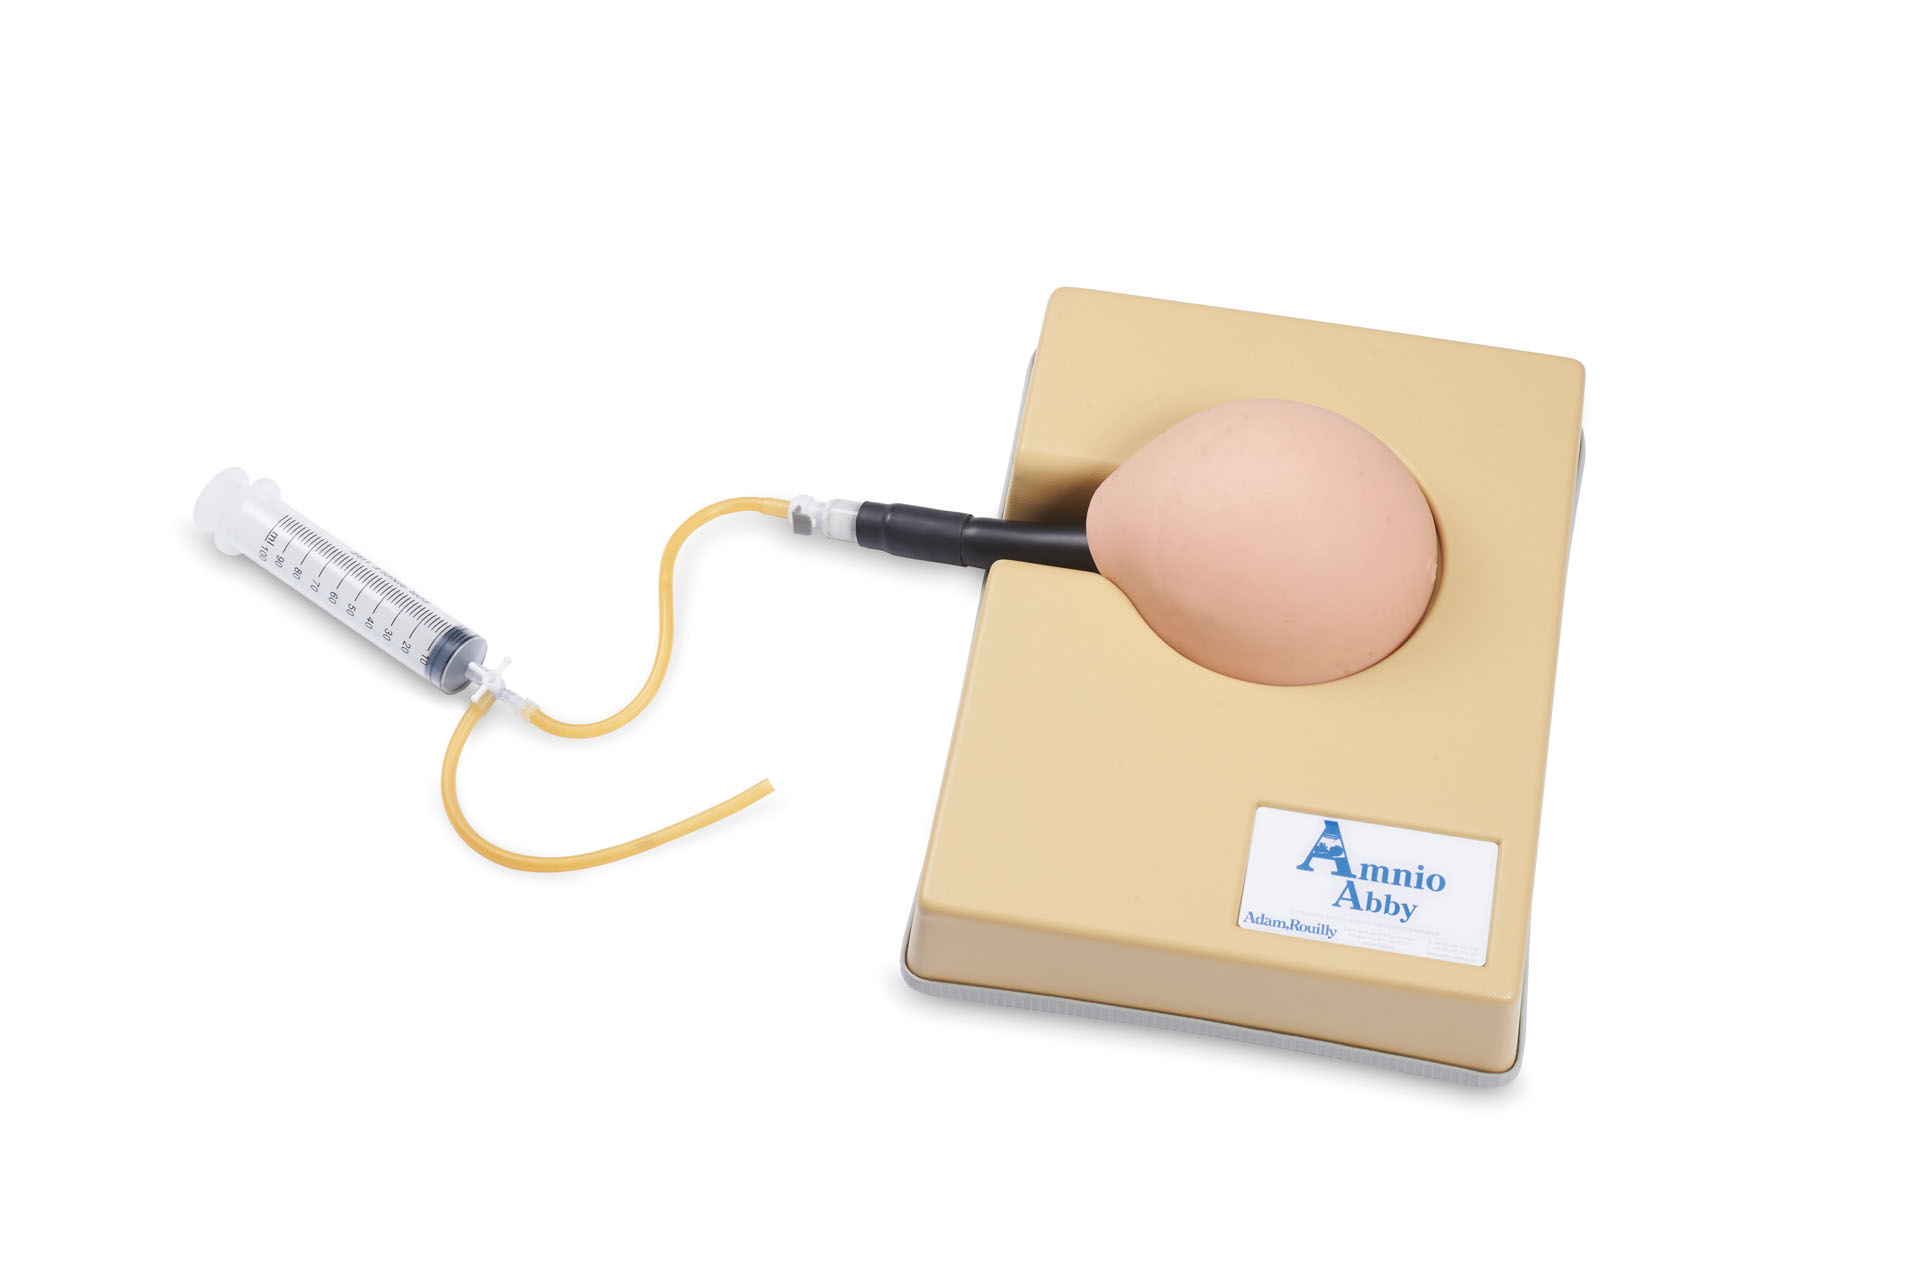 Amnio Abby® – Ultrasound Guided Invasive Procedures Simulator